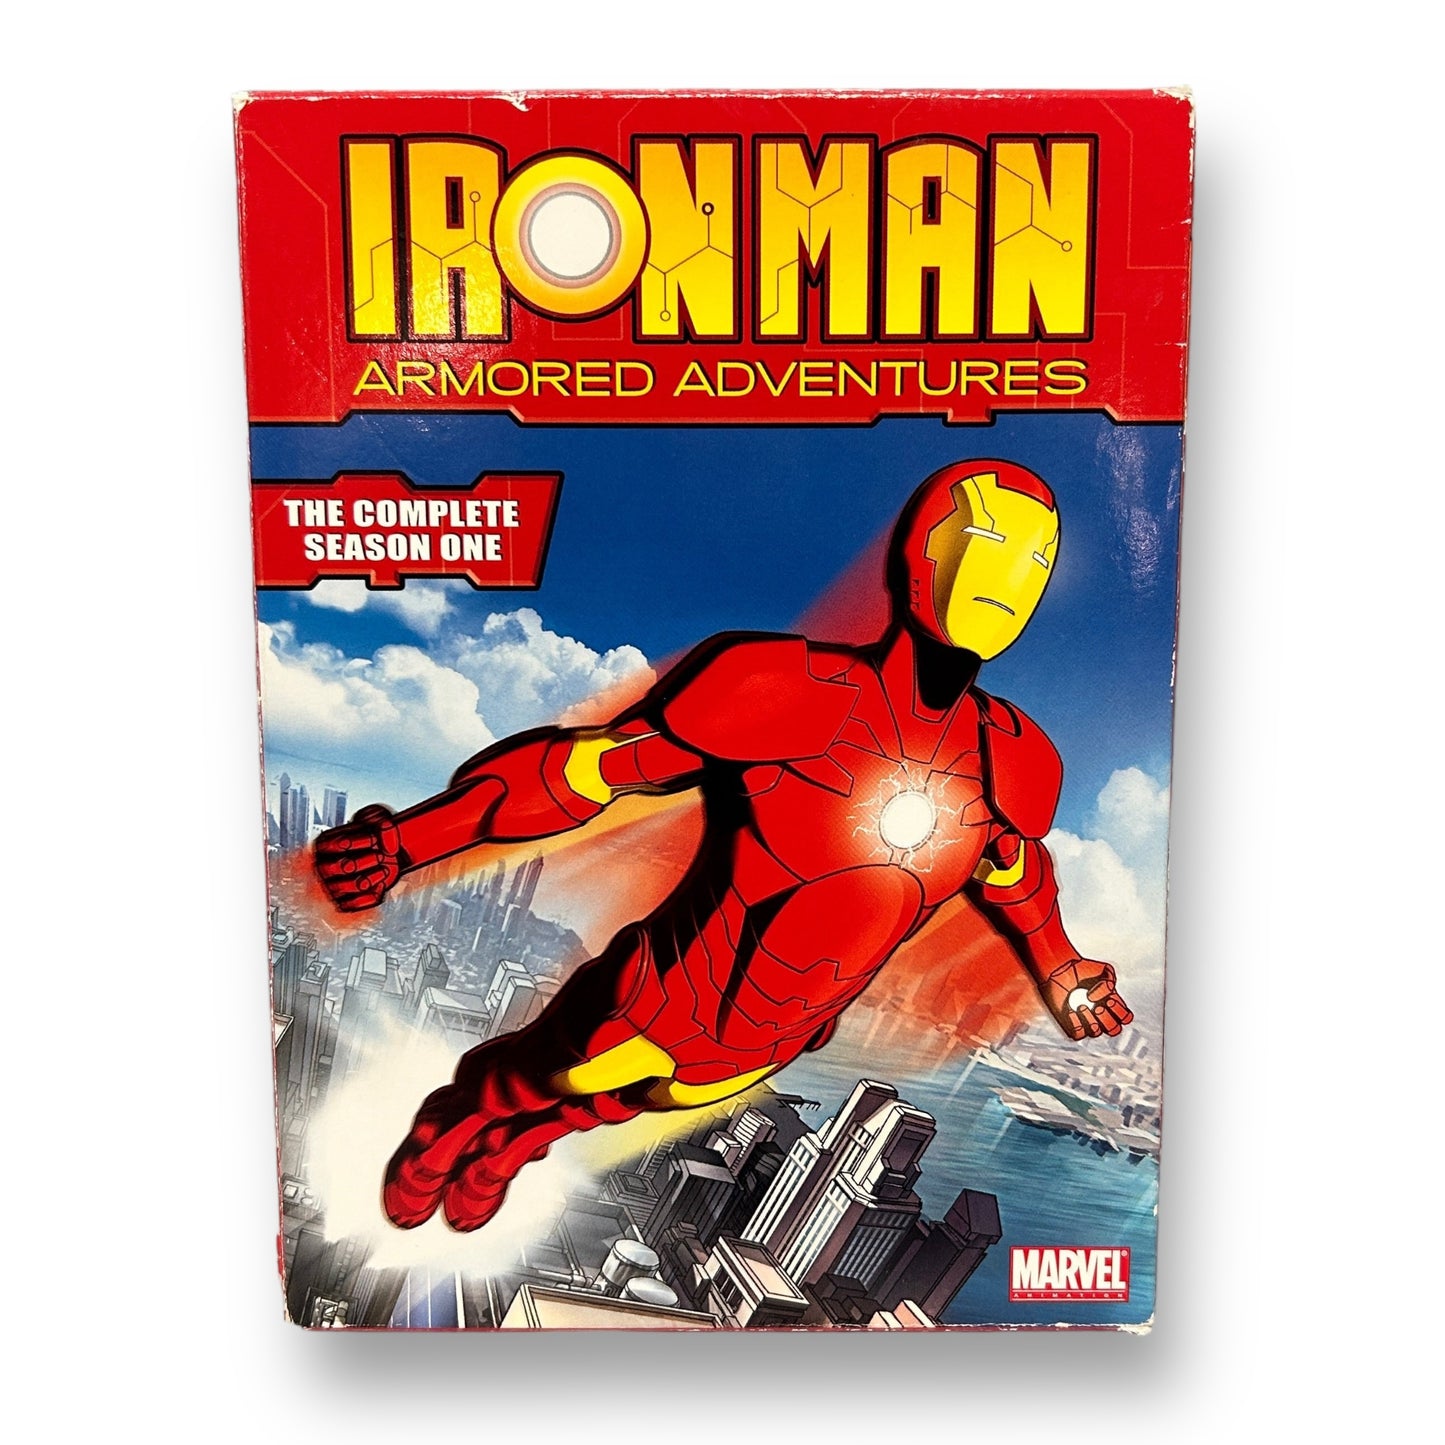 Marvel Animated Iron Man Season One DVD